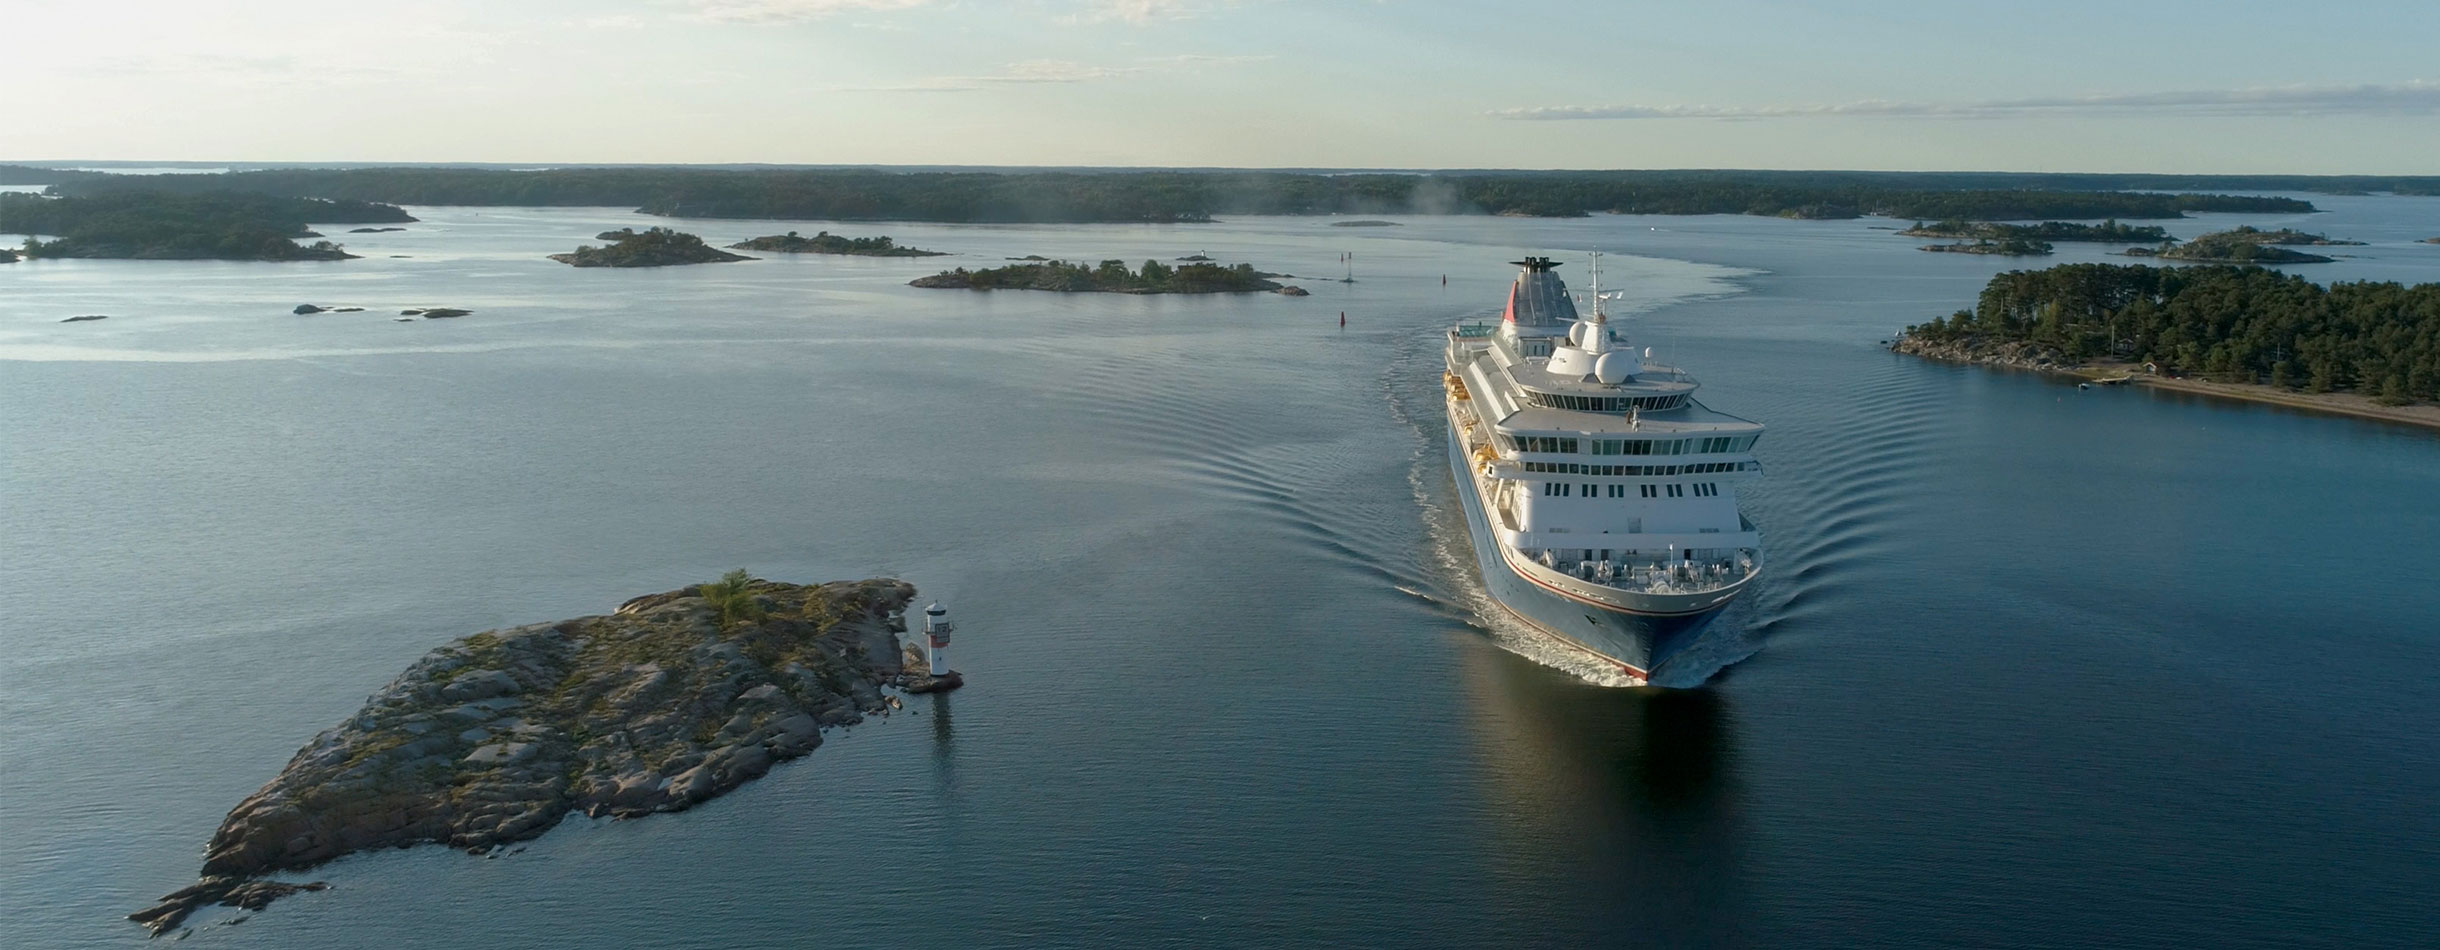 Balmoral cruising the Swedish waterways